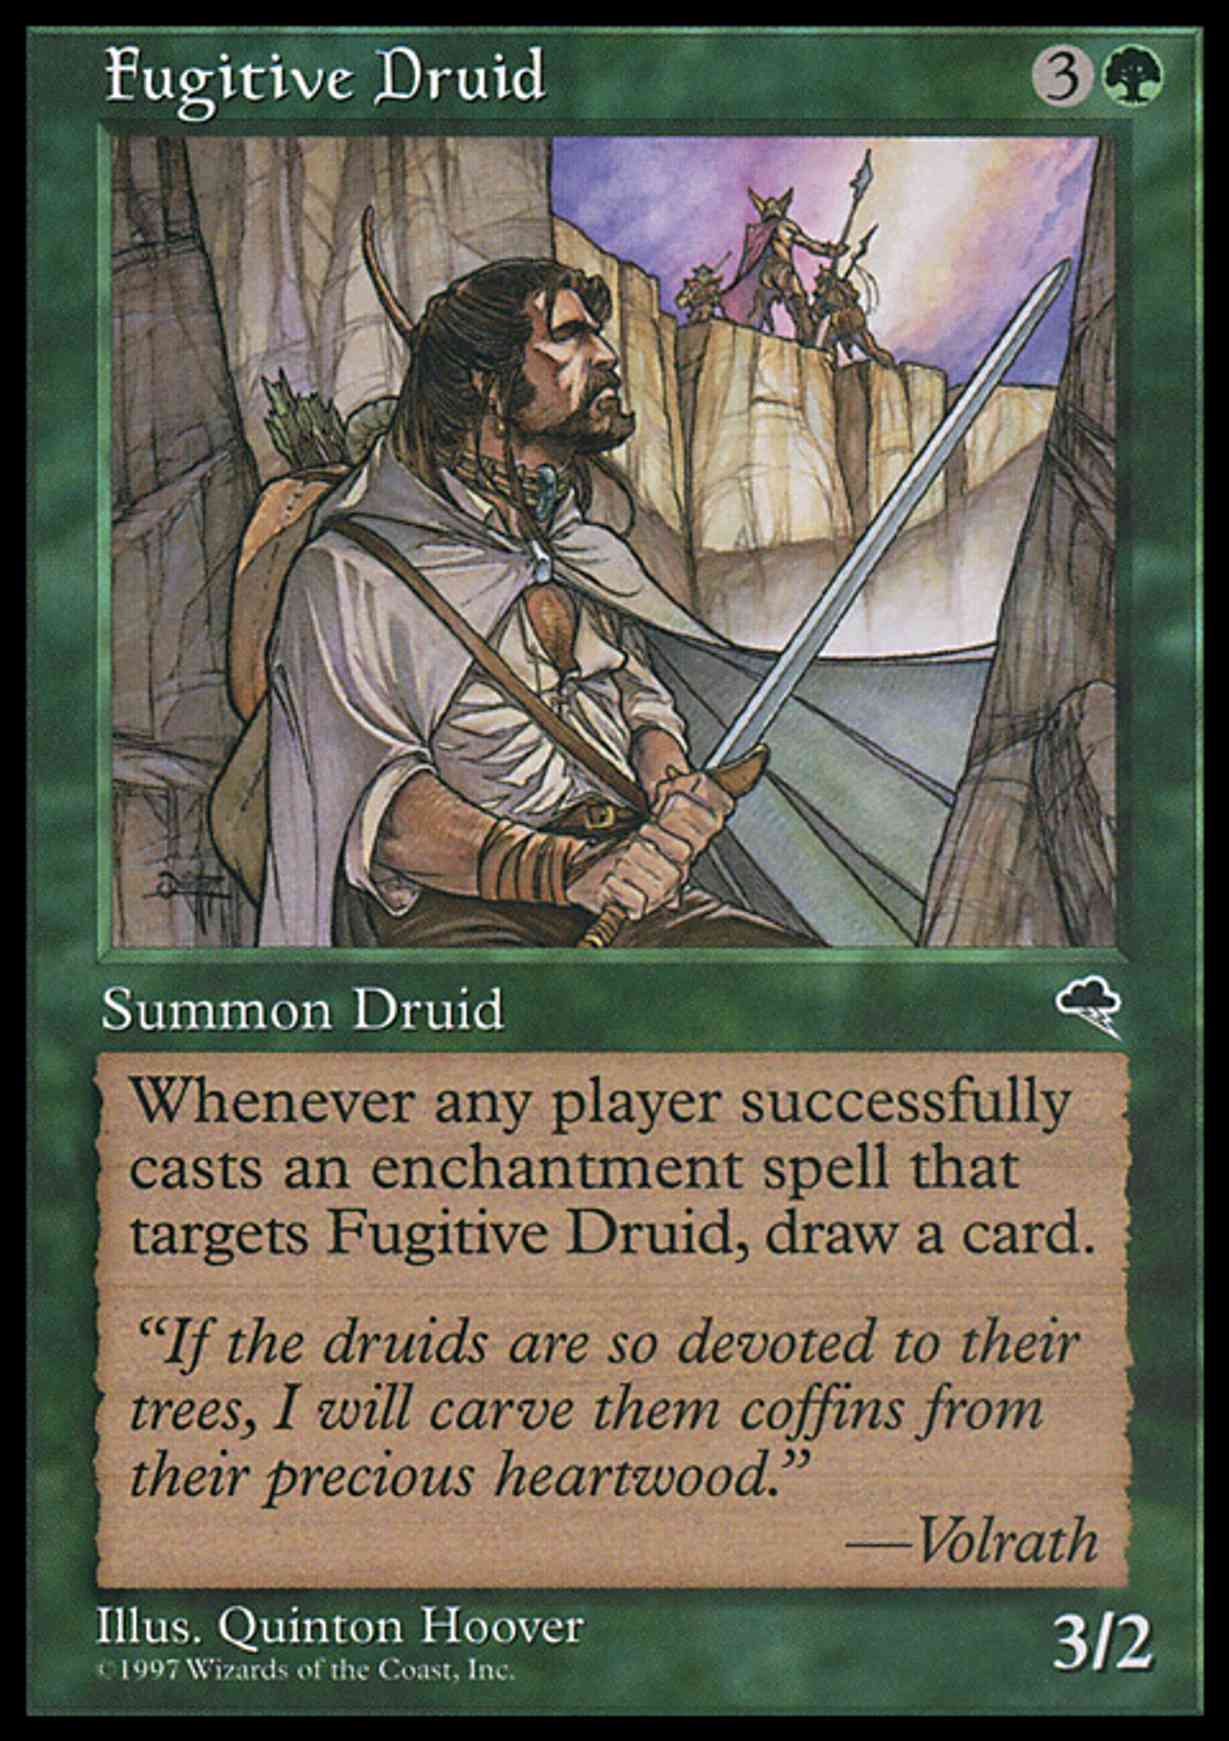 Fugitive Druid magic card front